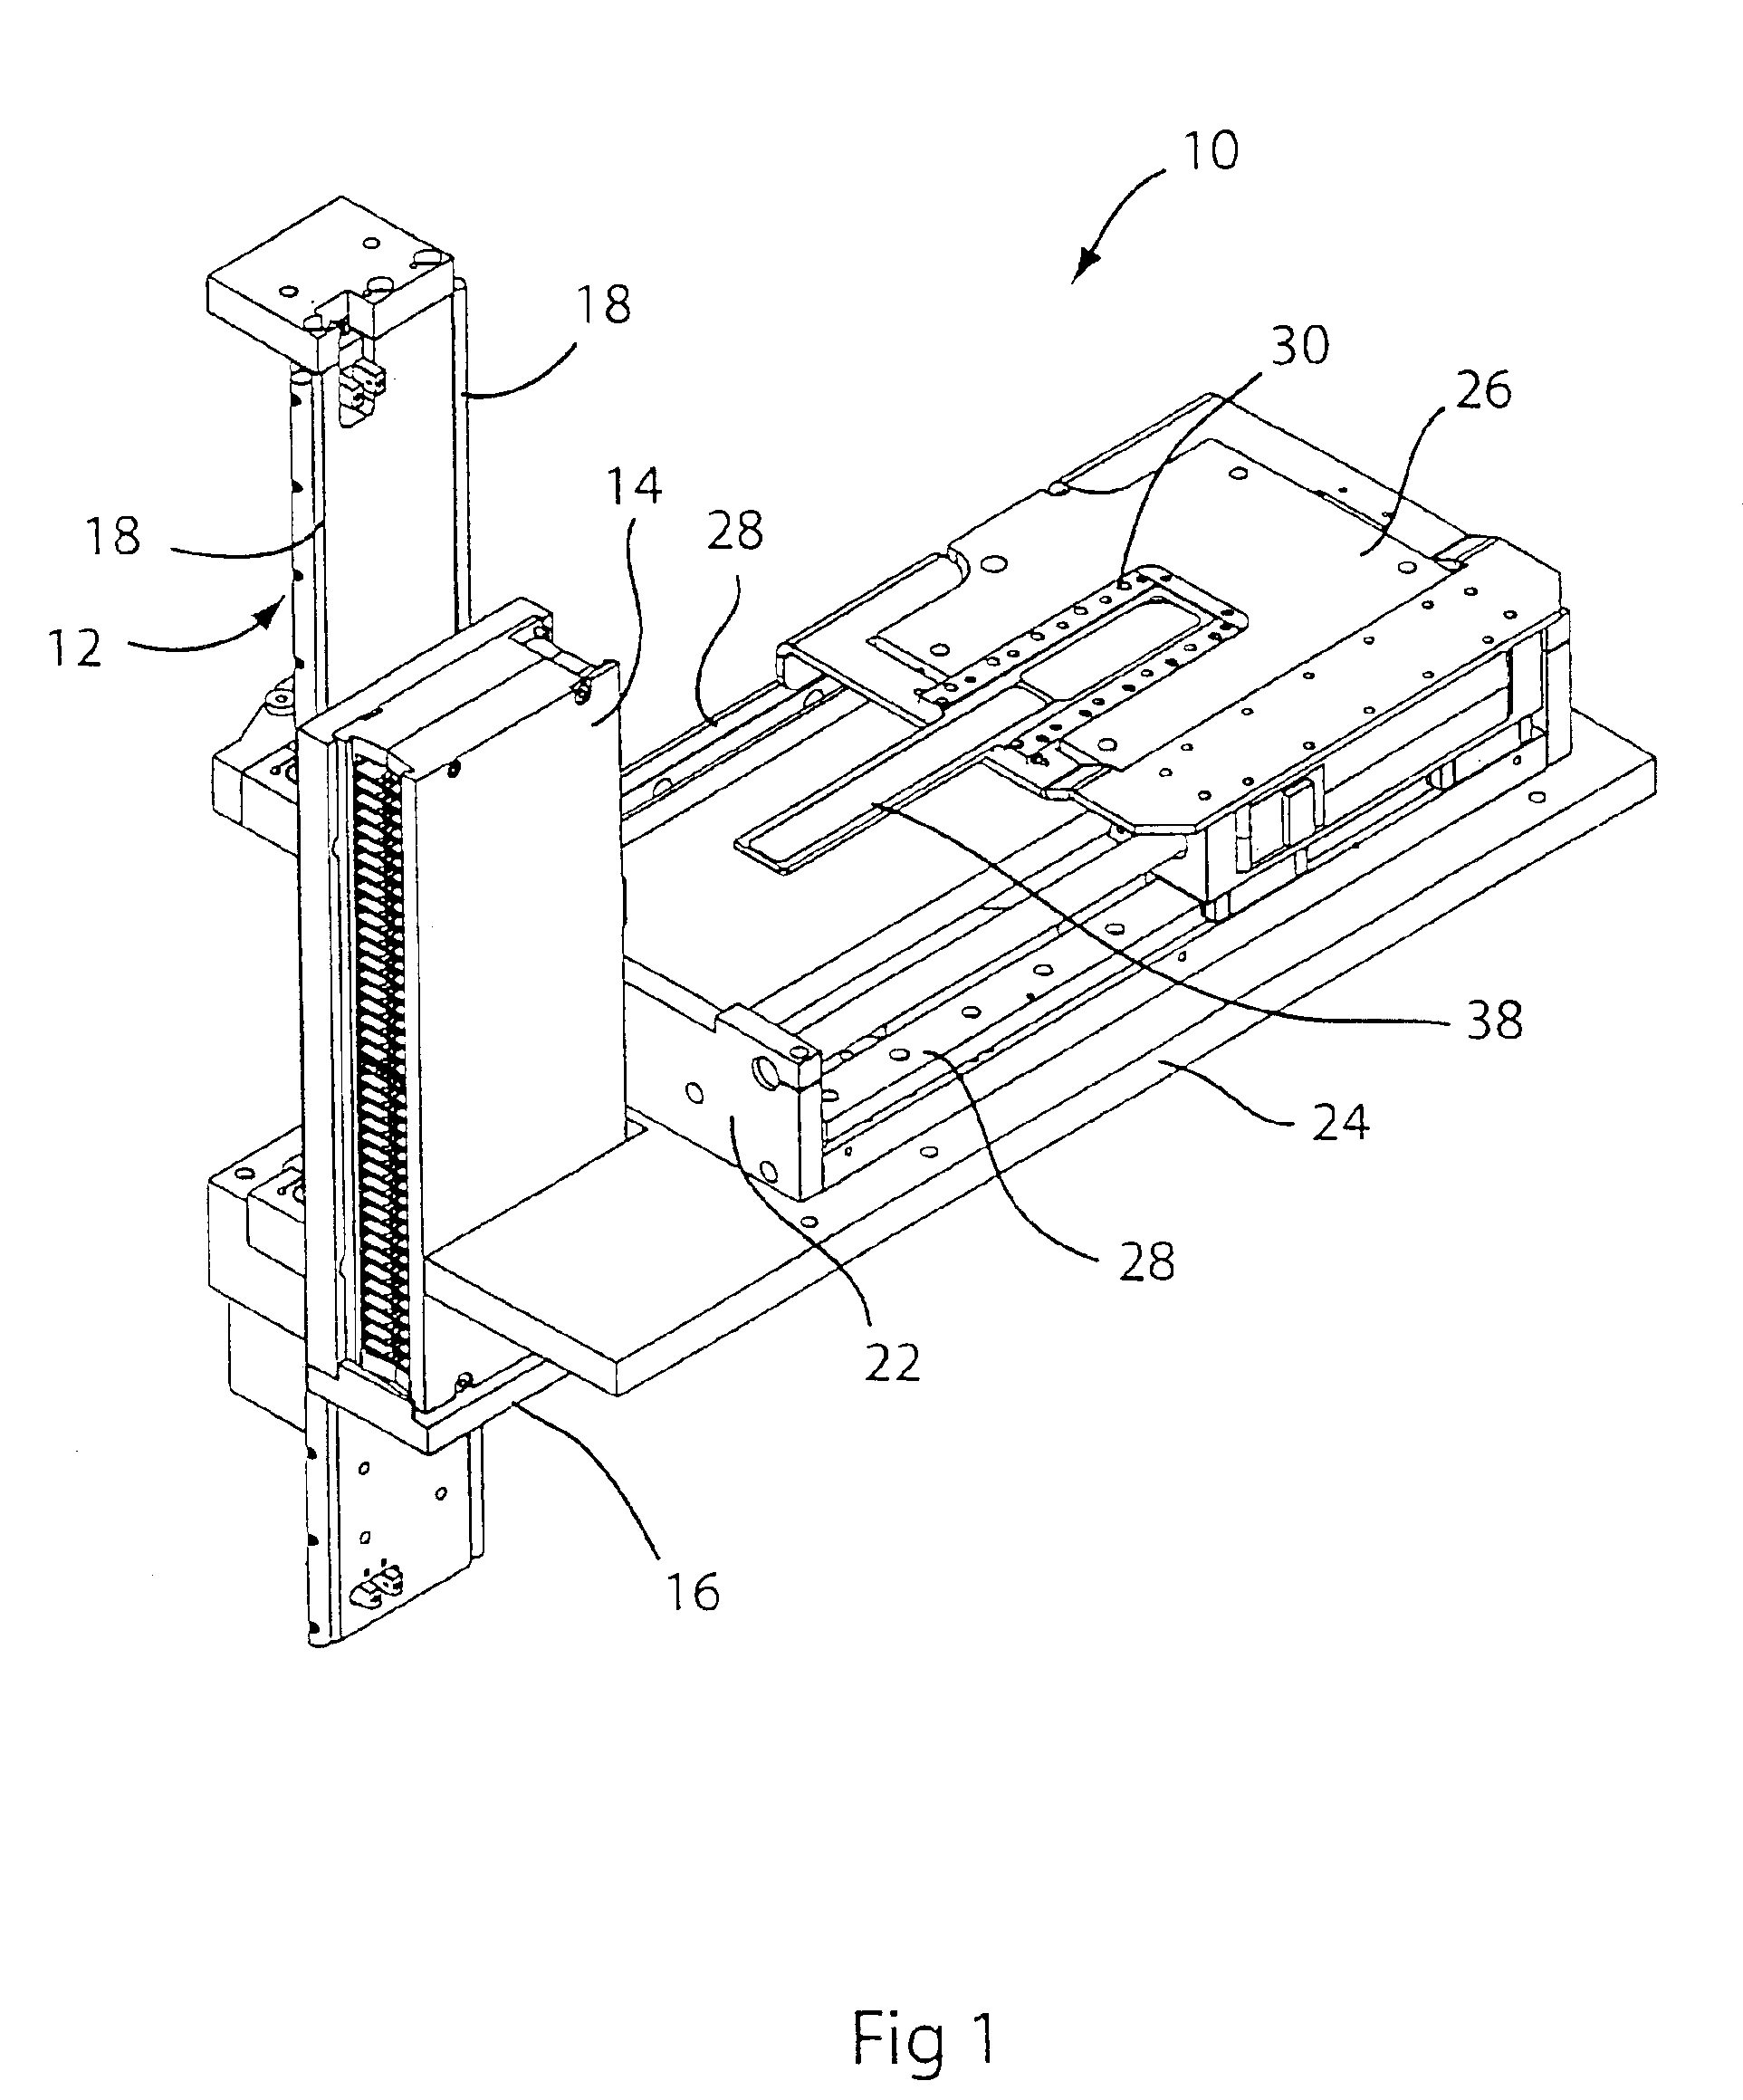 Slide feeder with air bearing conveyor